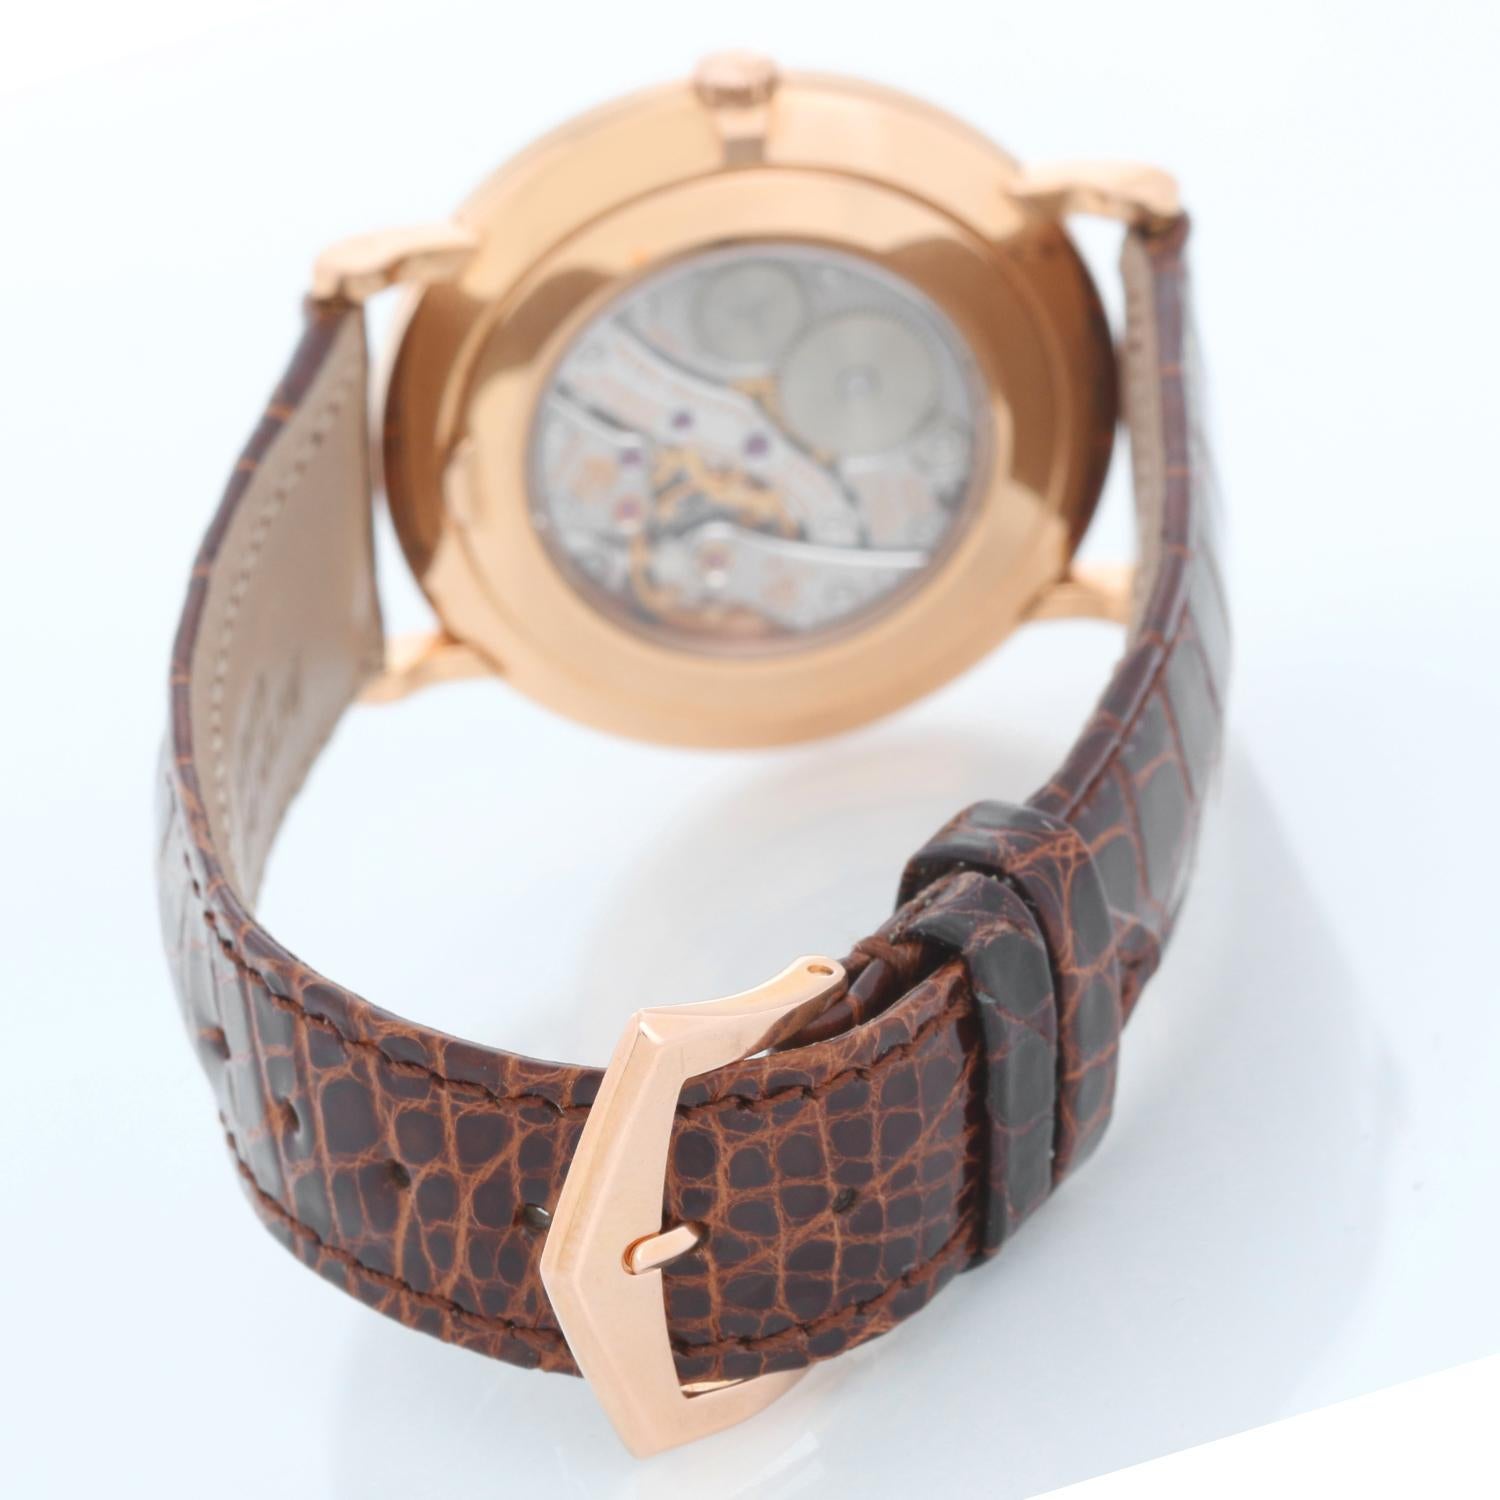 Rare Patek Philippe Calatrava 18k Rose Gold Men's Watch 5116R 2